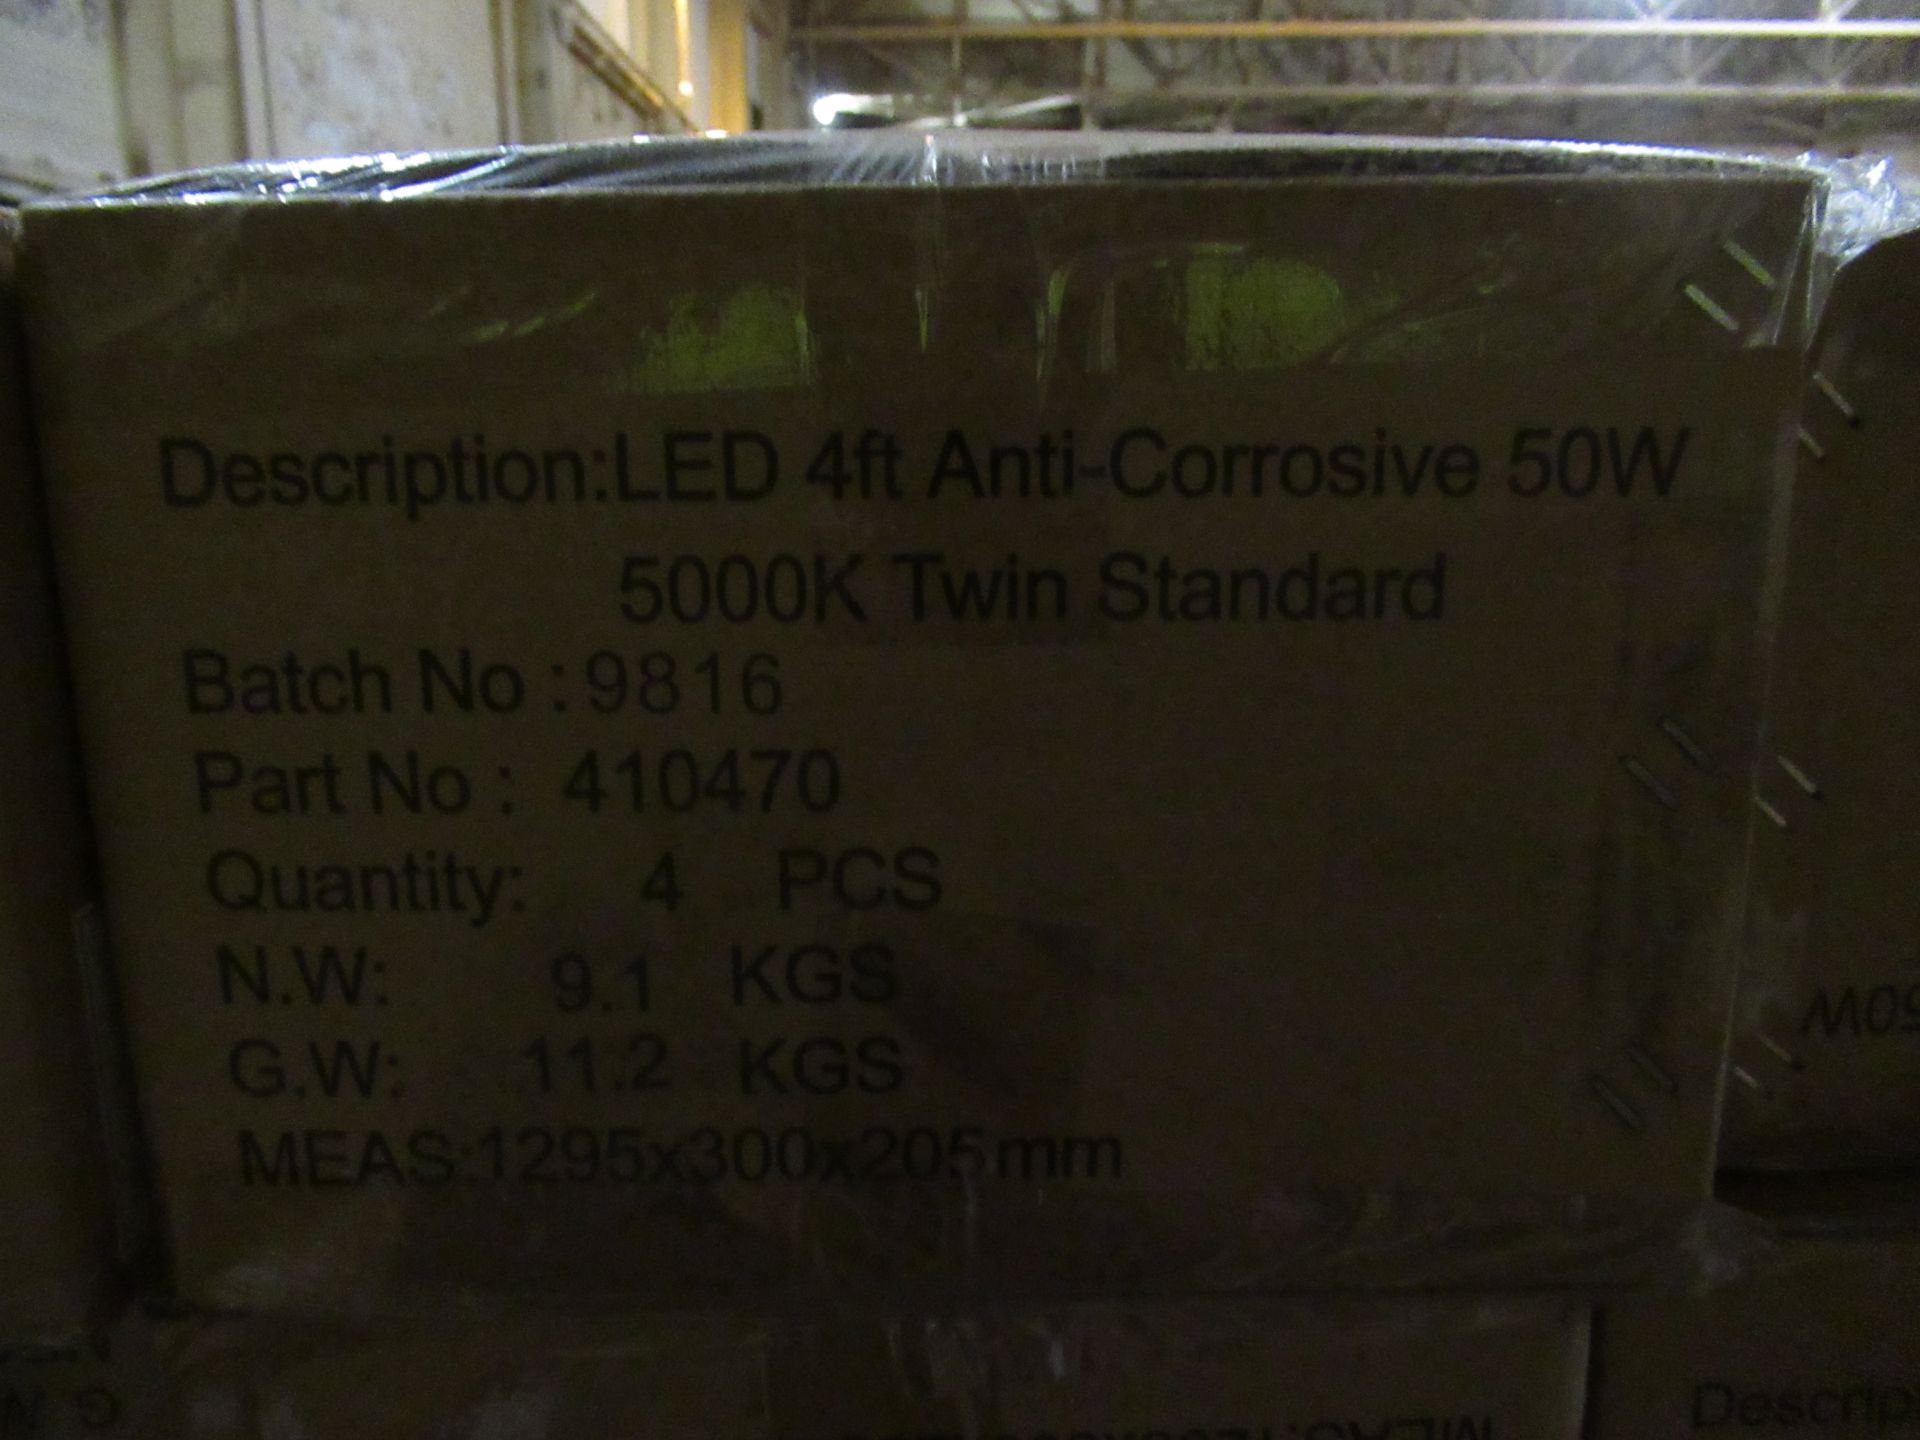 20 x LED 4ft Anti-Corrosive 50W 5000K Twin - Image 2 of 4